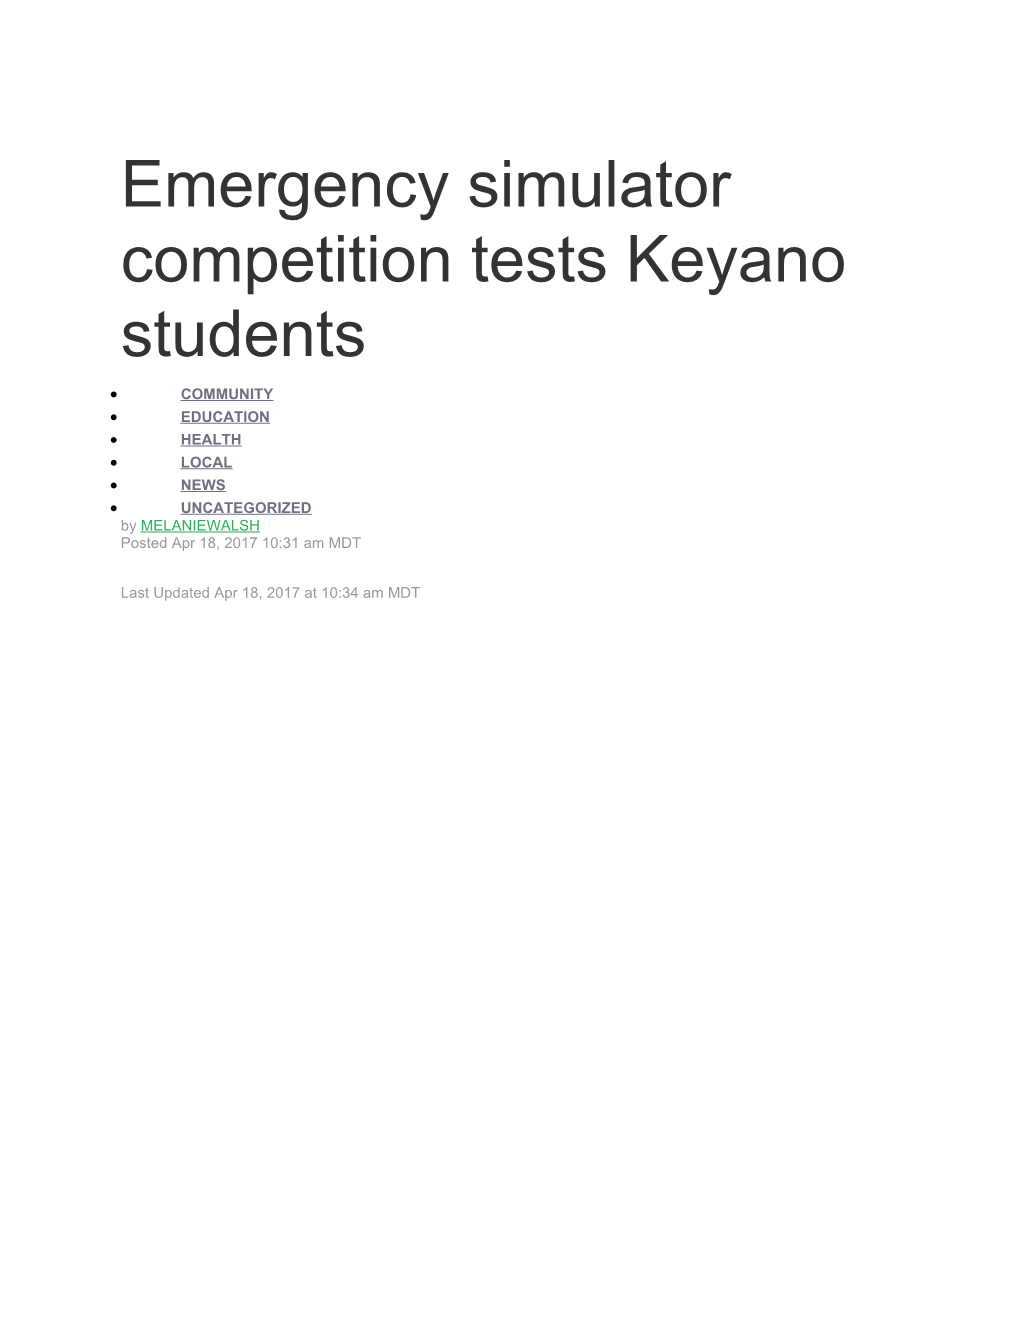 Emergency Simulator Competition Tests Keyano Students